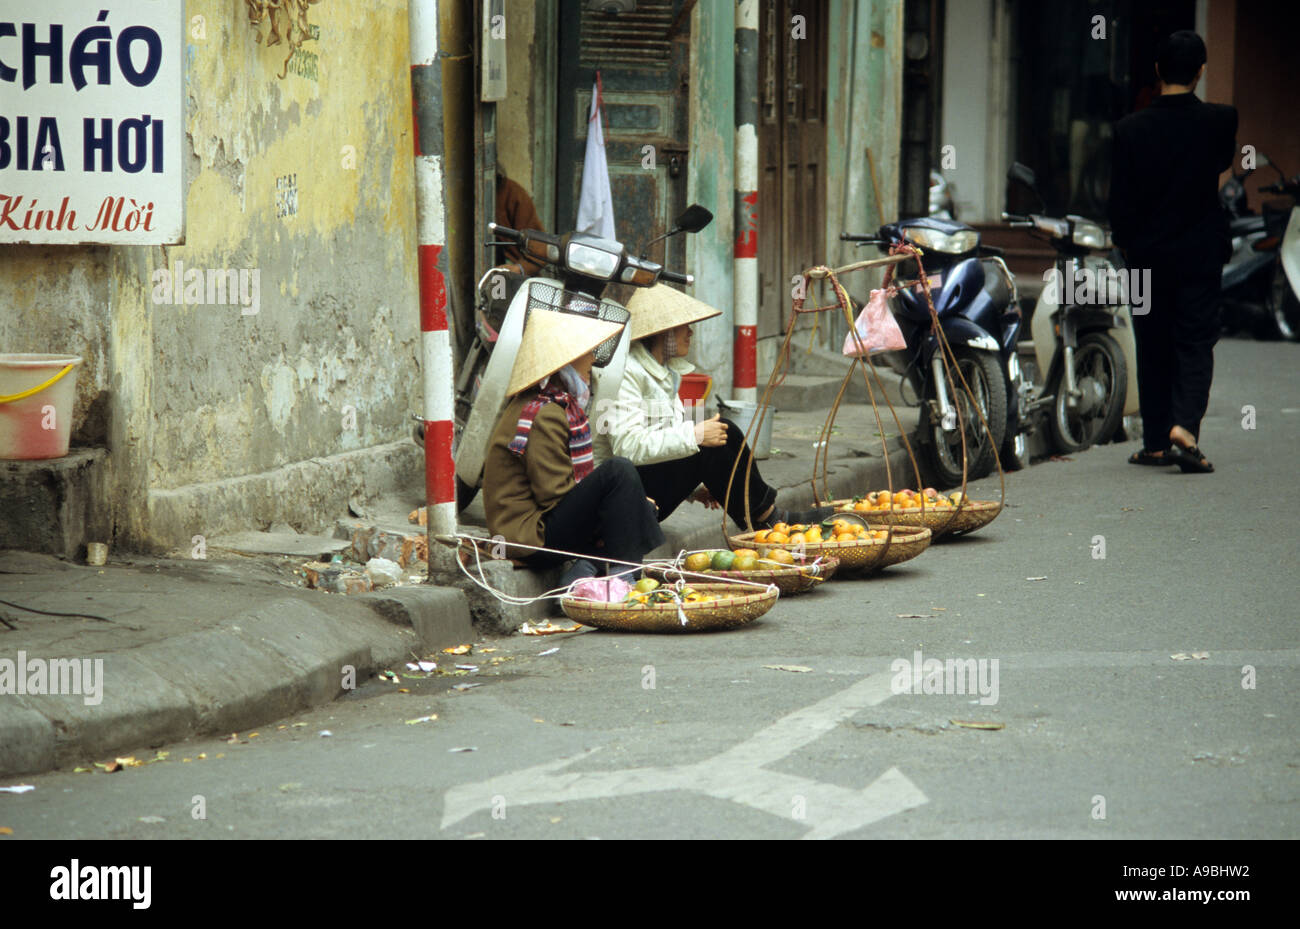 Two women selling fruit, Phu Doan St, Hanoi Old Quarter, Viet Nam Stock Photo